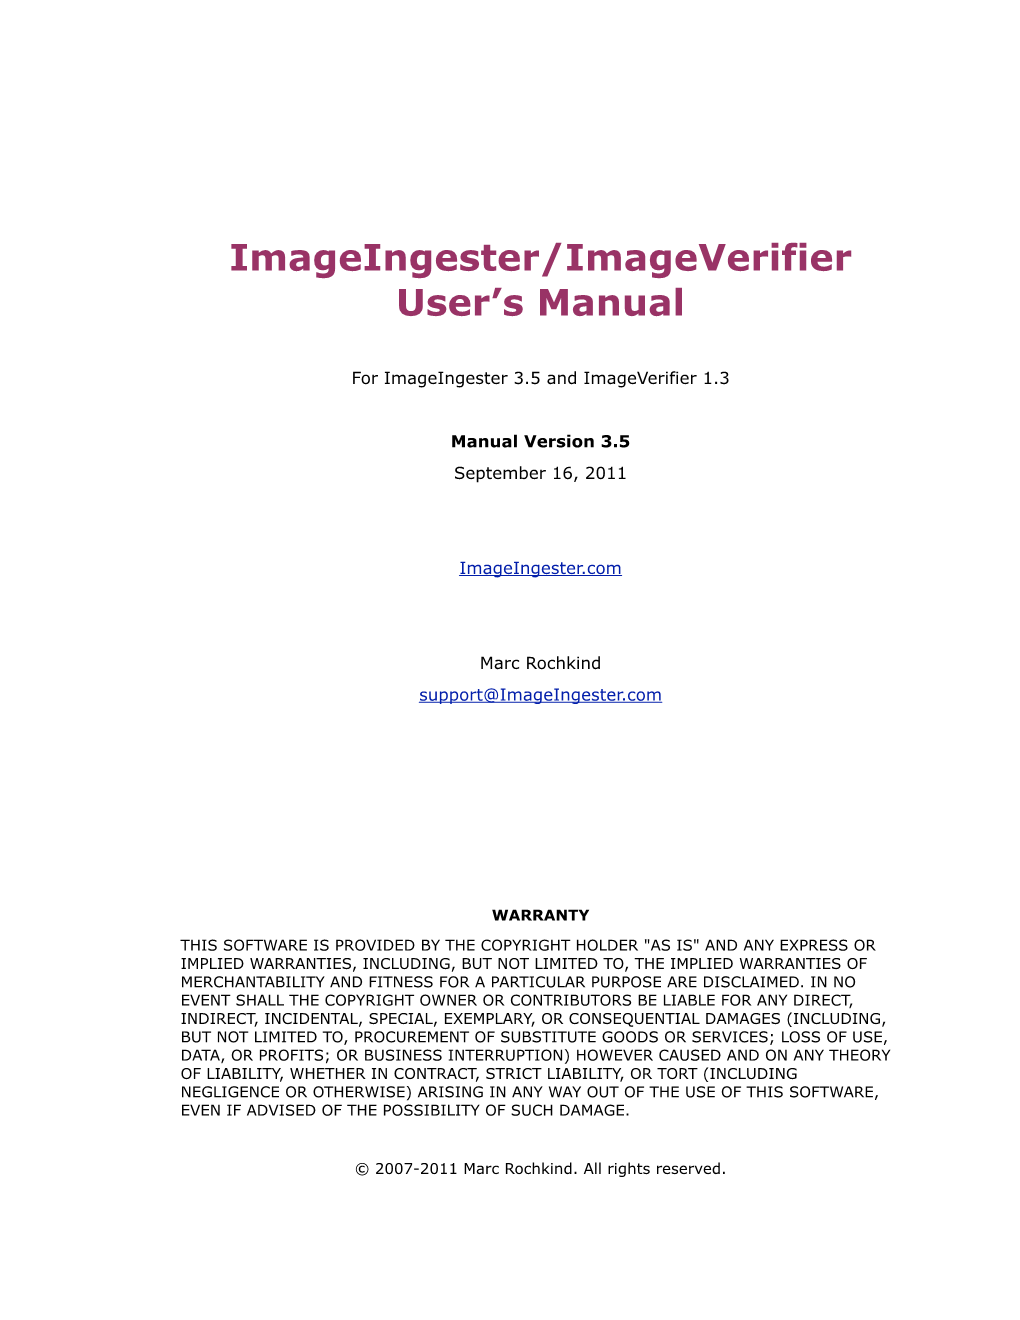 Imageingester/Imageverifier User's Manual